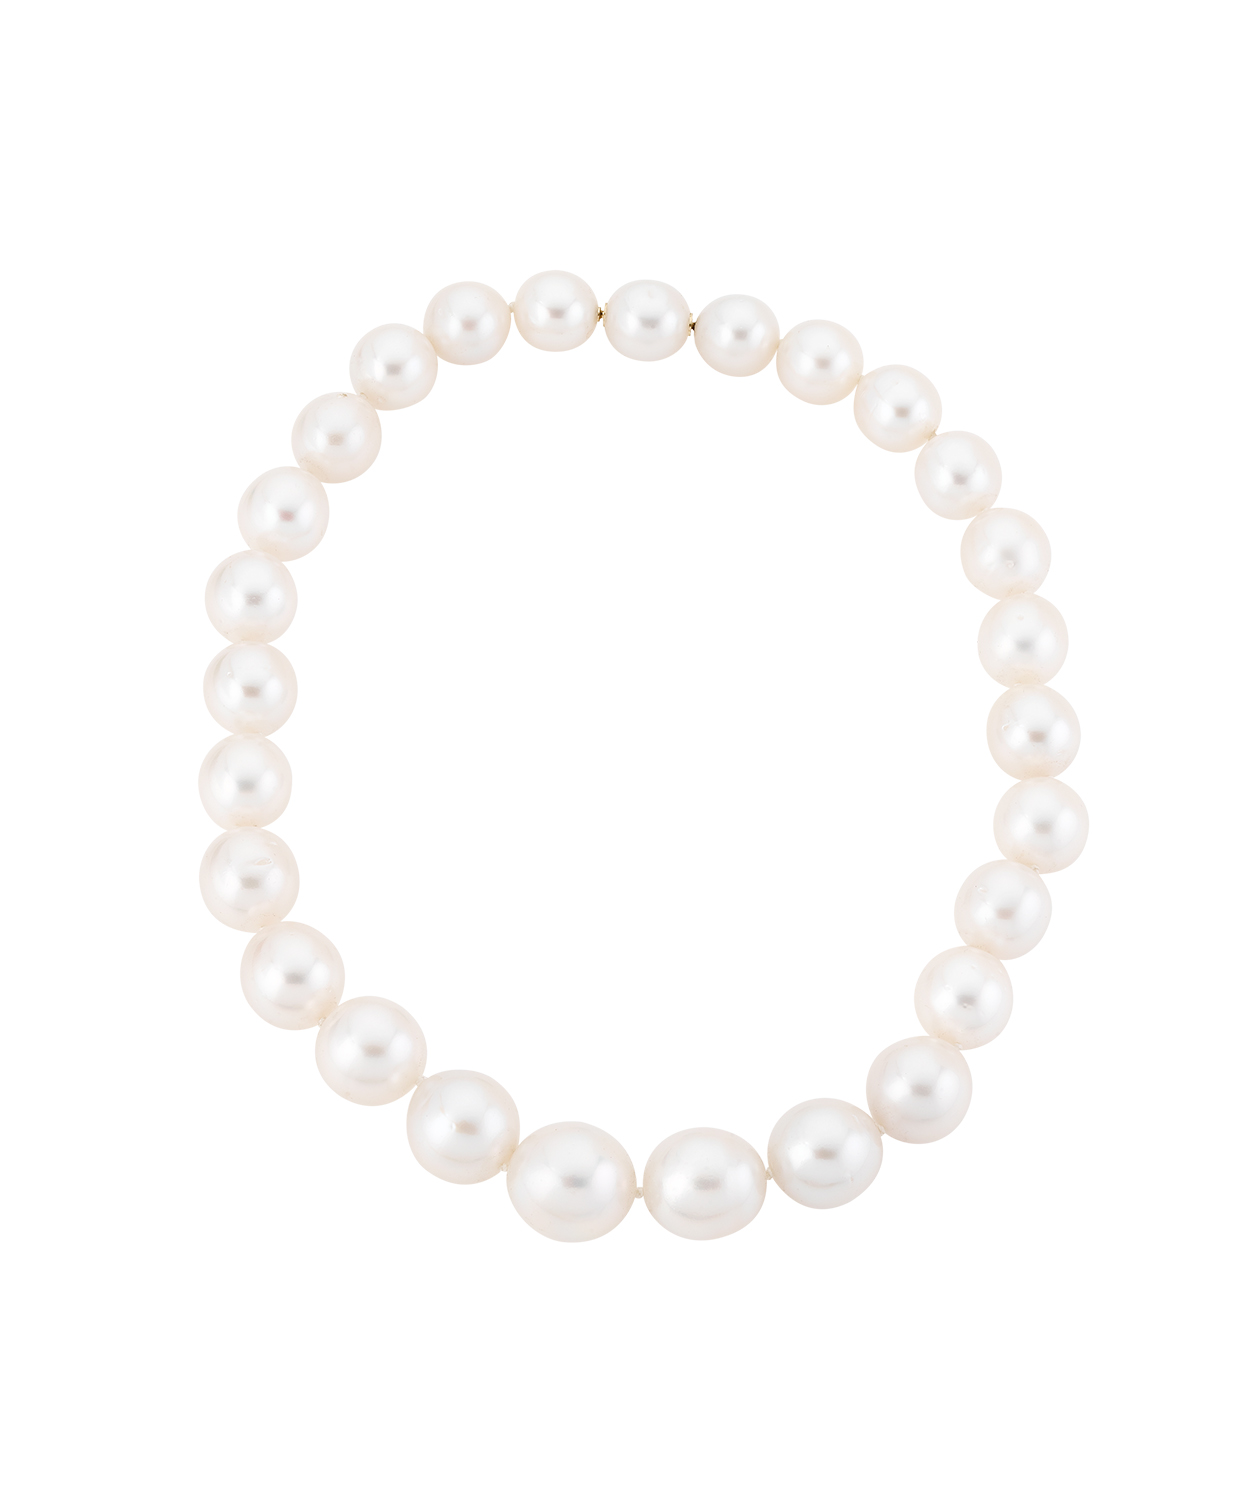 Freshwater Cream Pearls - Filigree Jewellery Christchurch, New Zealand